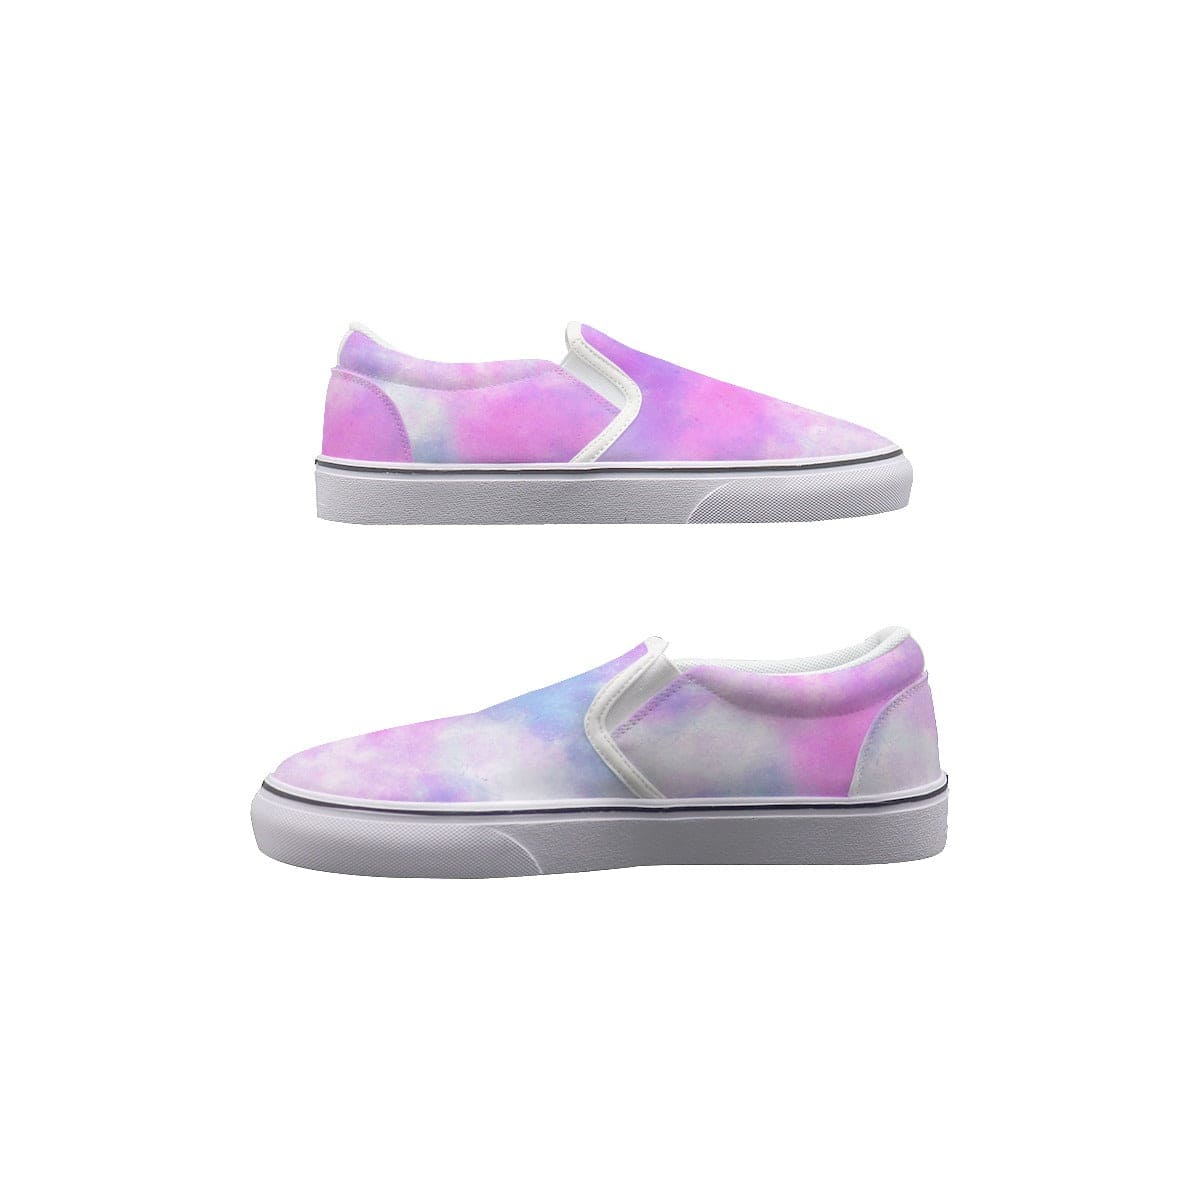 Yoycol Galaxy Glam -  Women's Slip On Sneakers